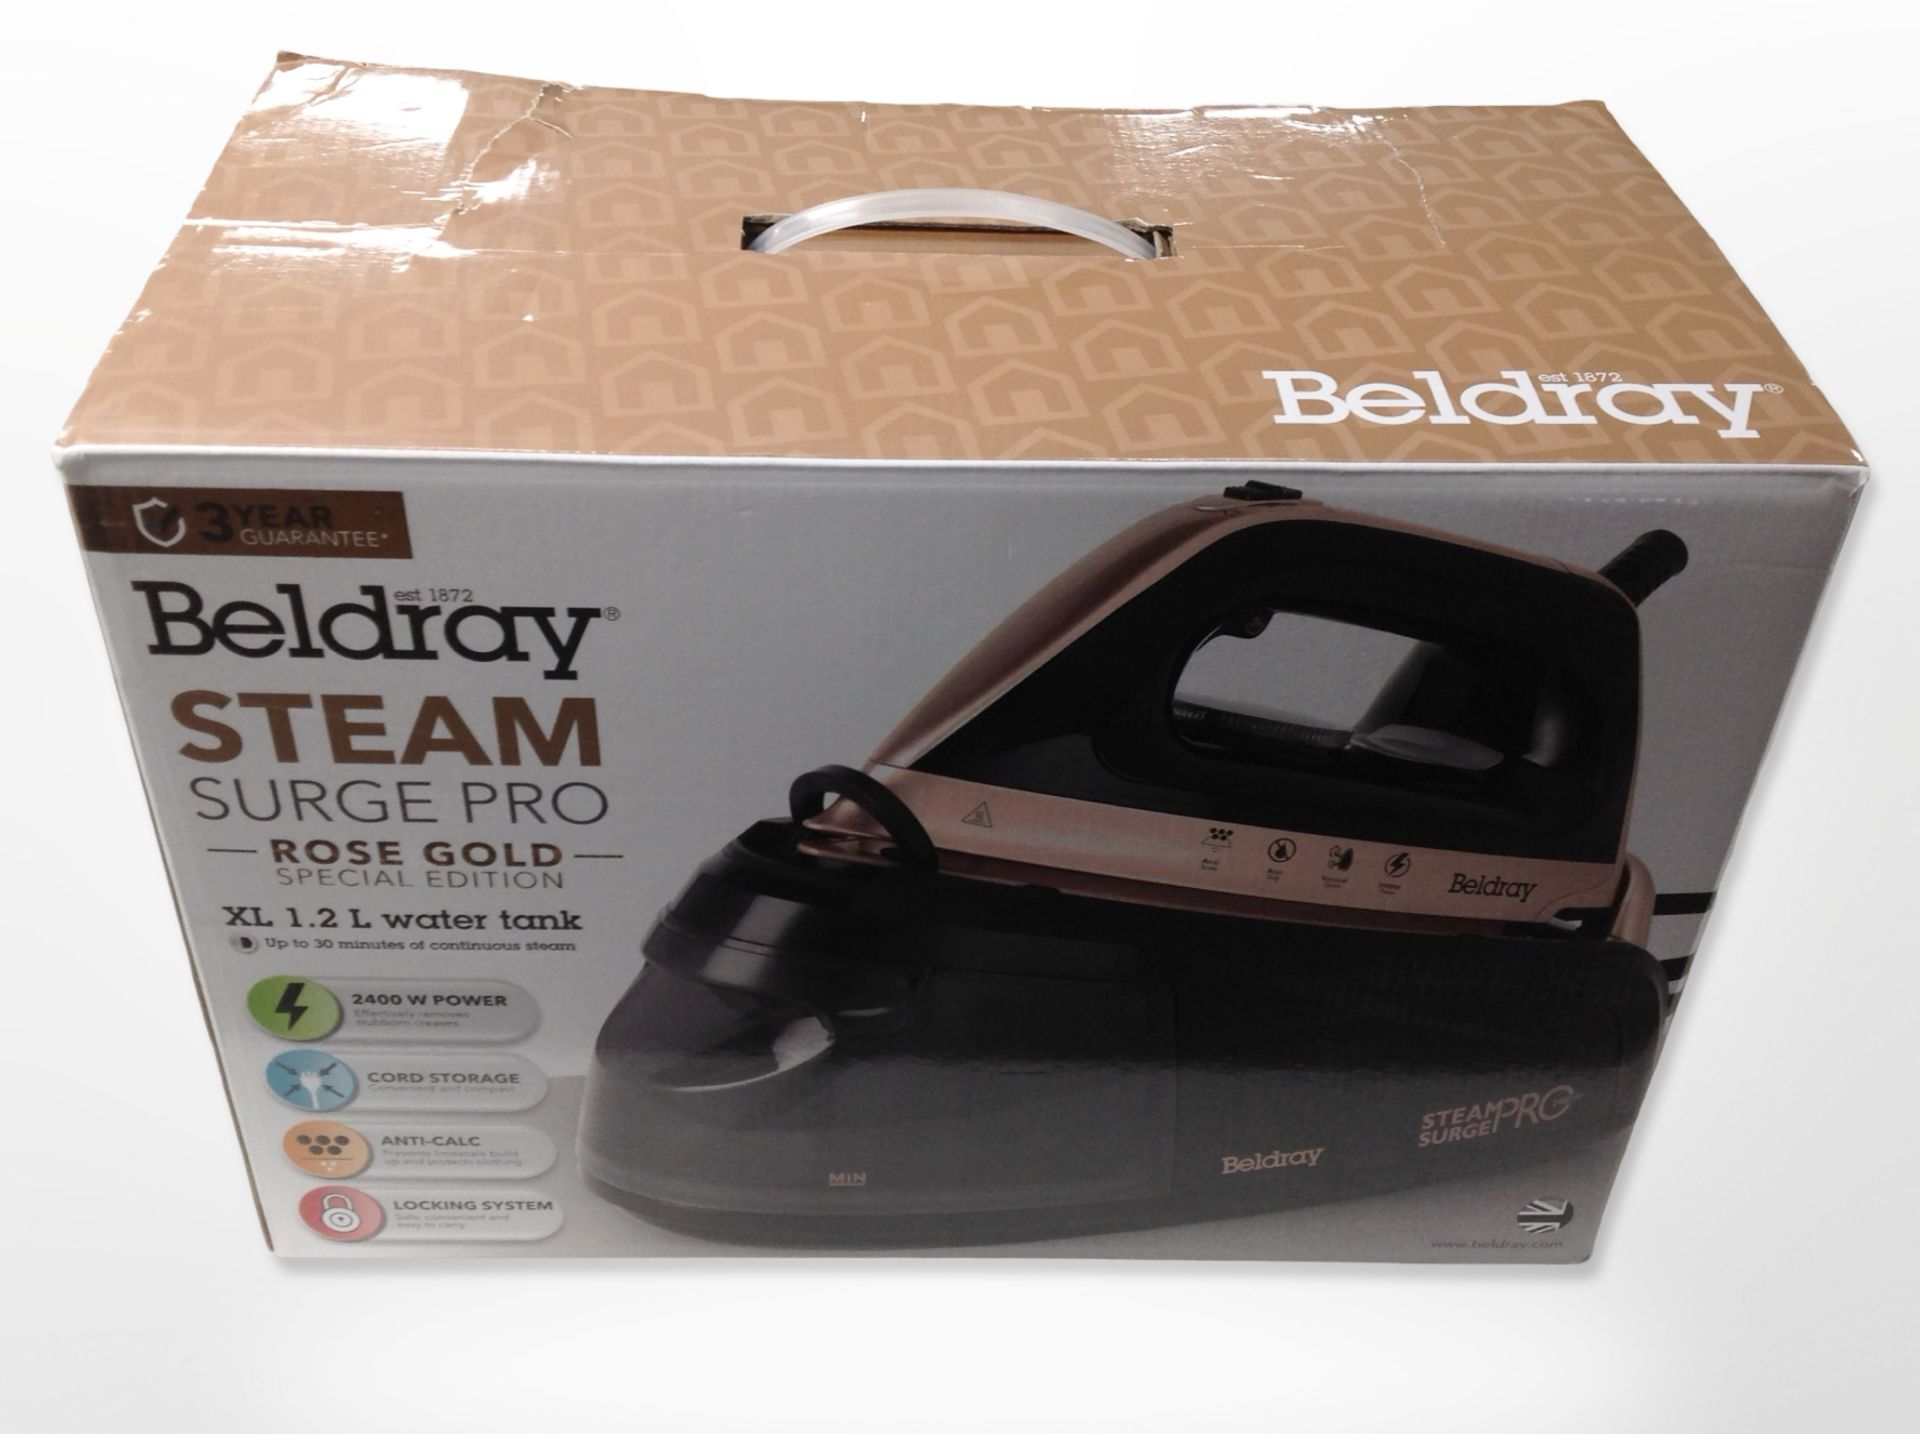 A Beldray steam iron in box.